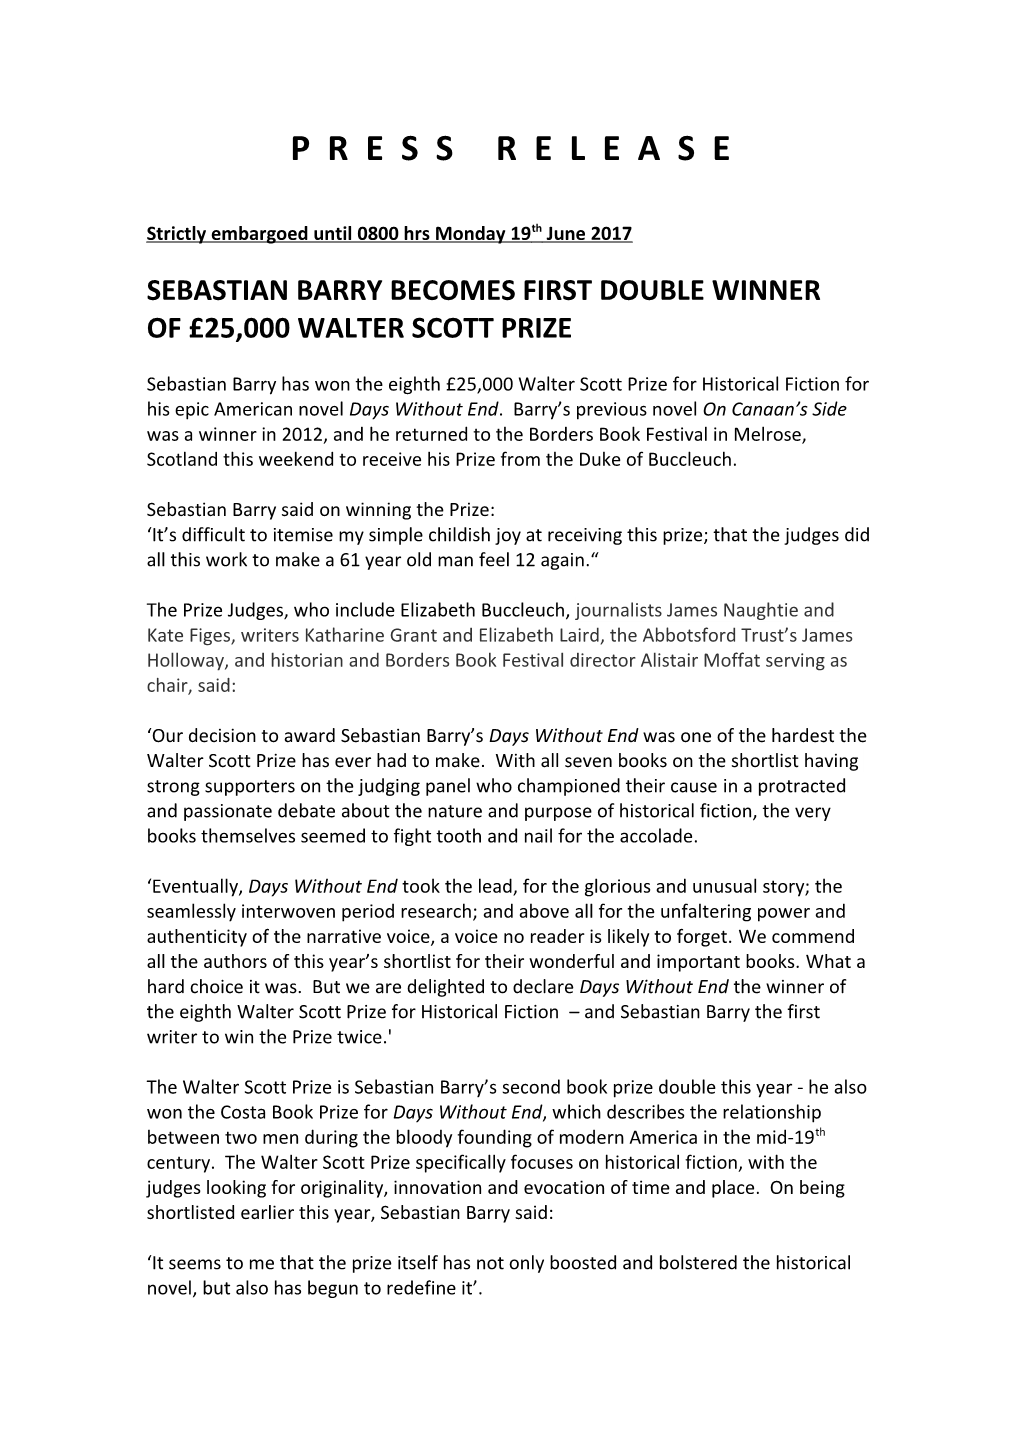 Sebastian Barry Becomes First Double Winner